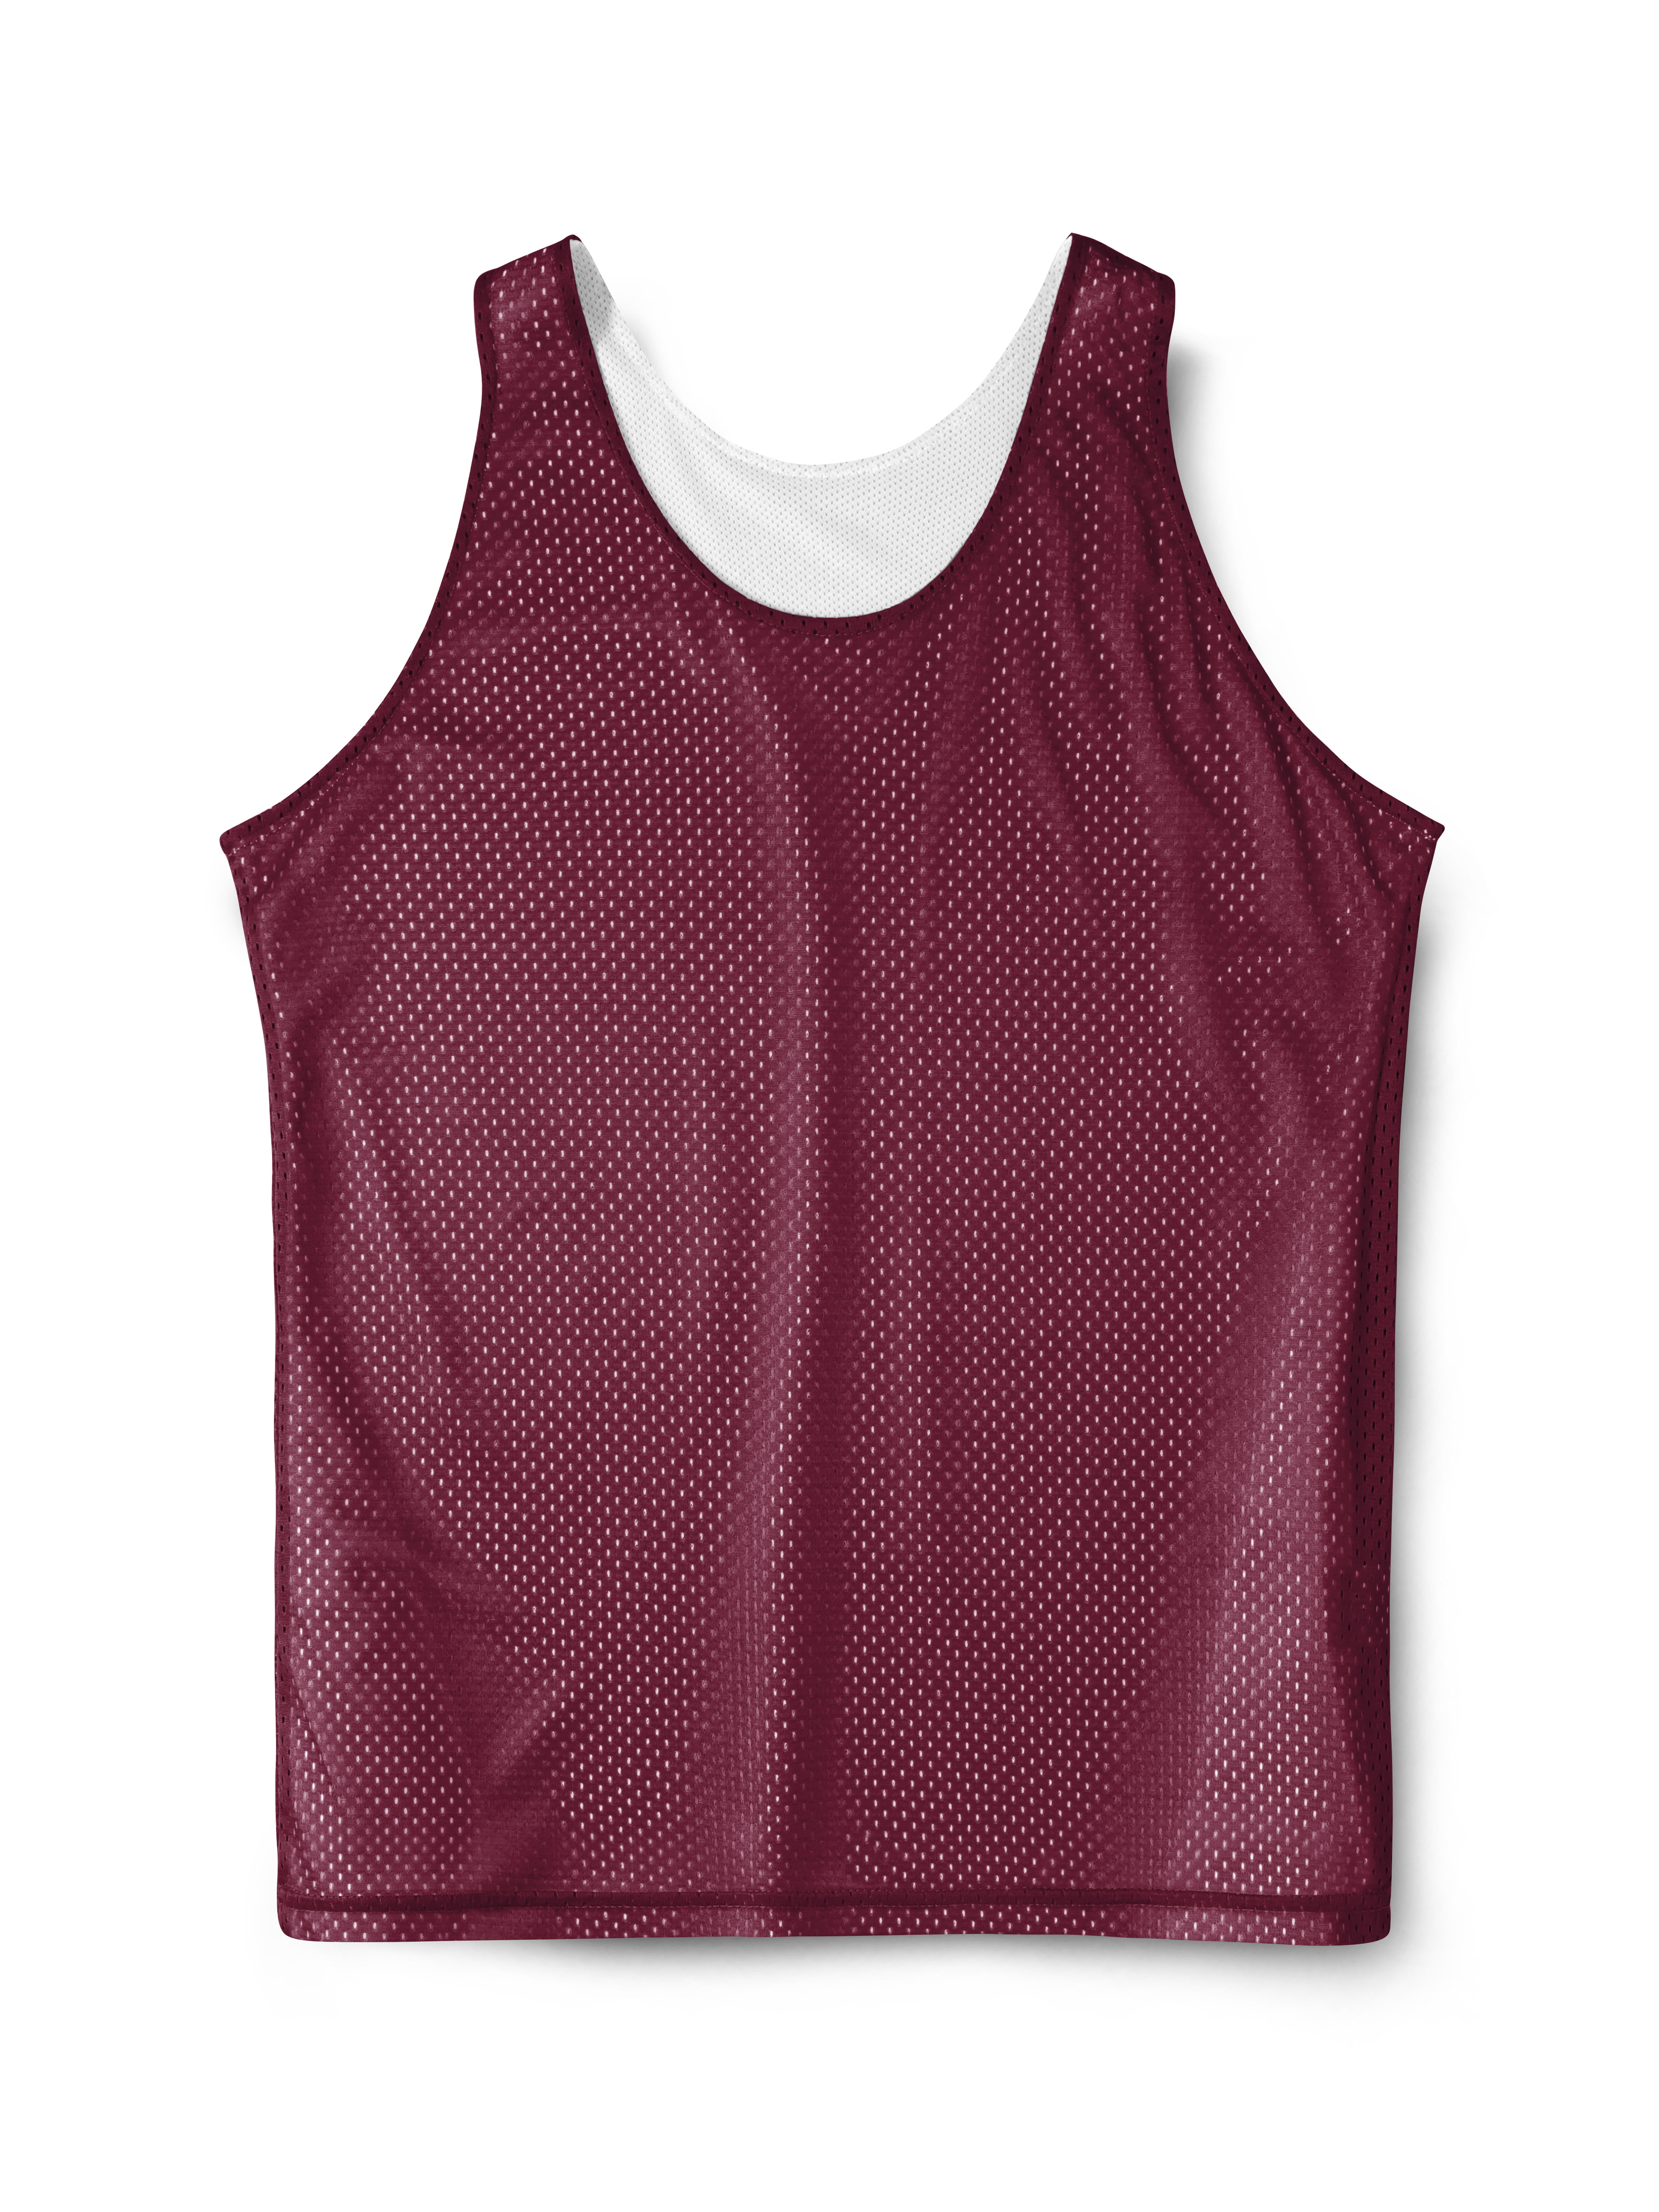  Phoneutrix Blank Basketball Jersey, Men's Mesh Athletic  Reversible Sports Shirts S-3XL : Sports & Outdoors